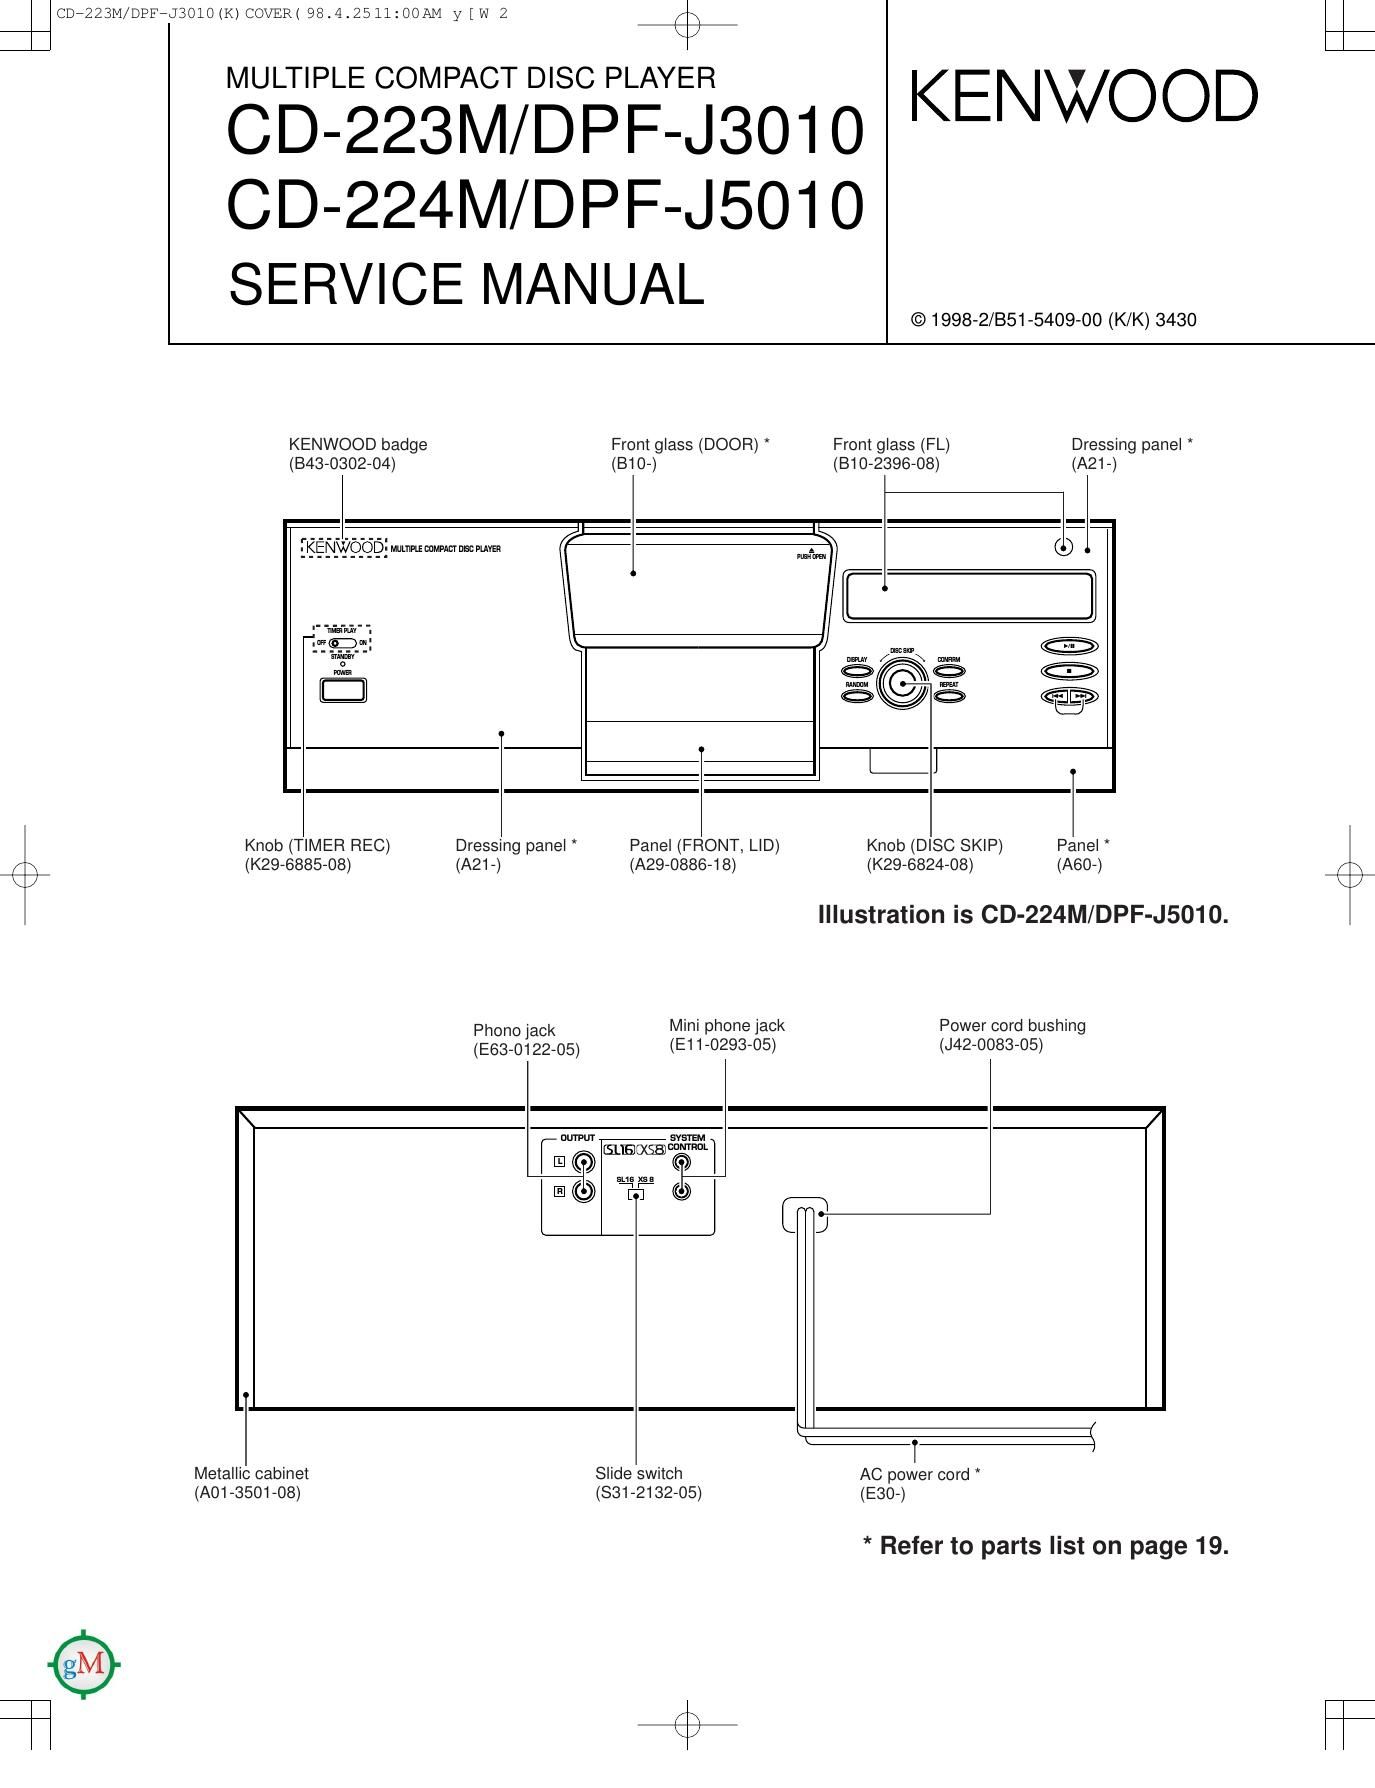 Kenwood DPFJ 3010 Service Manual